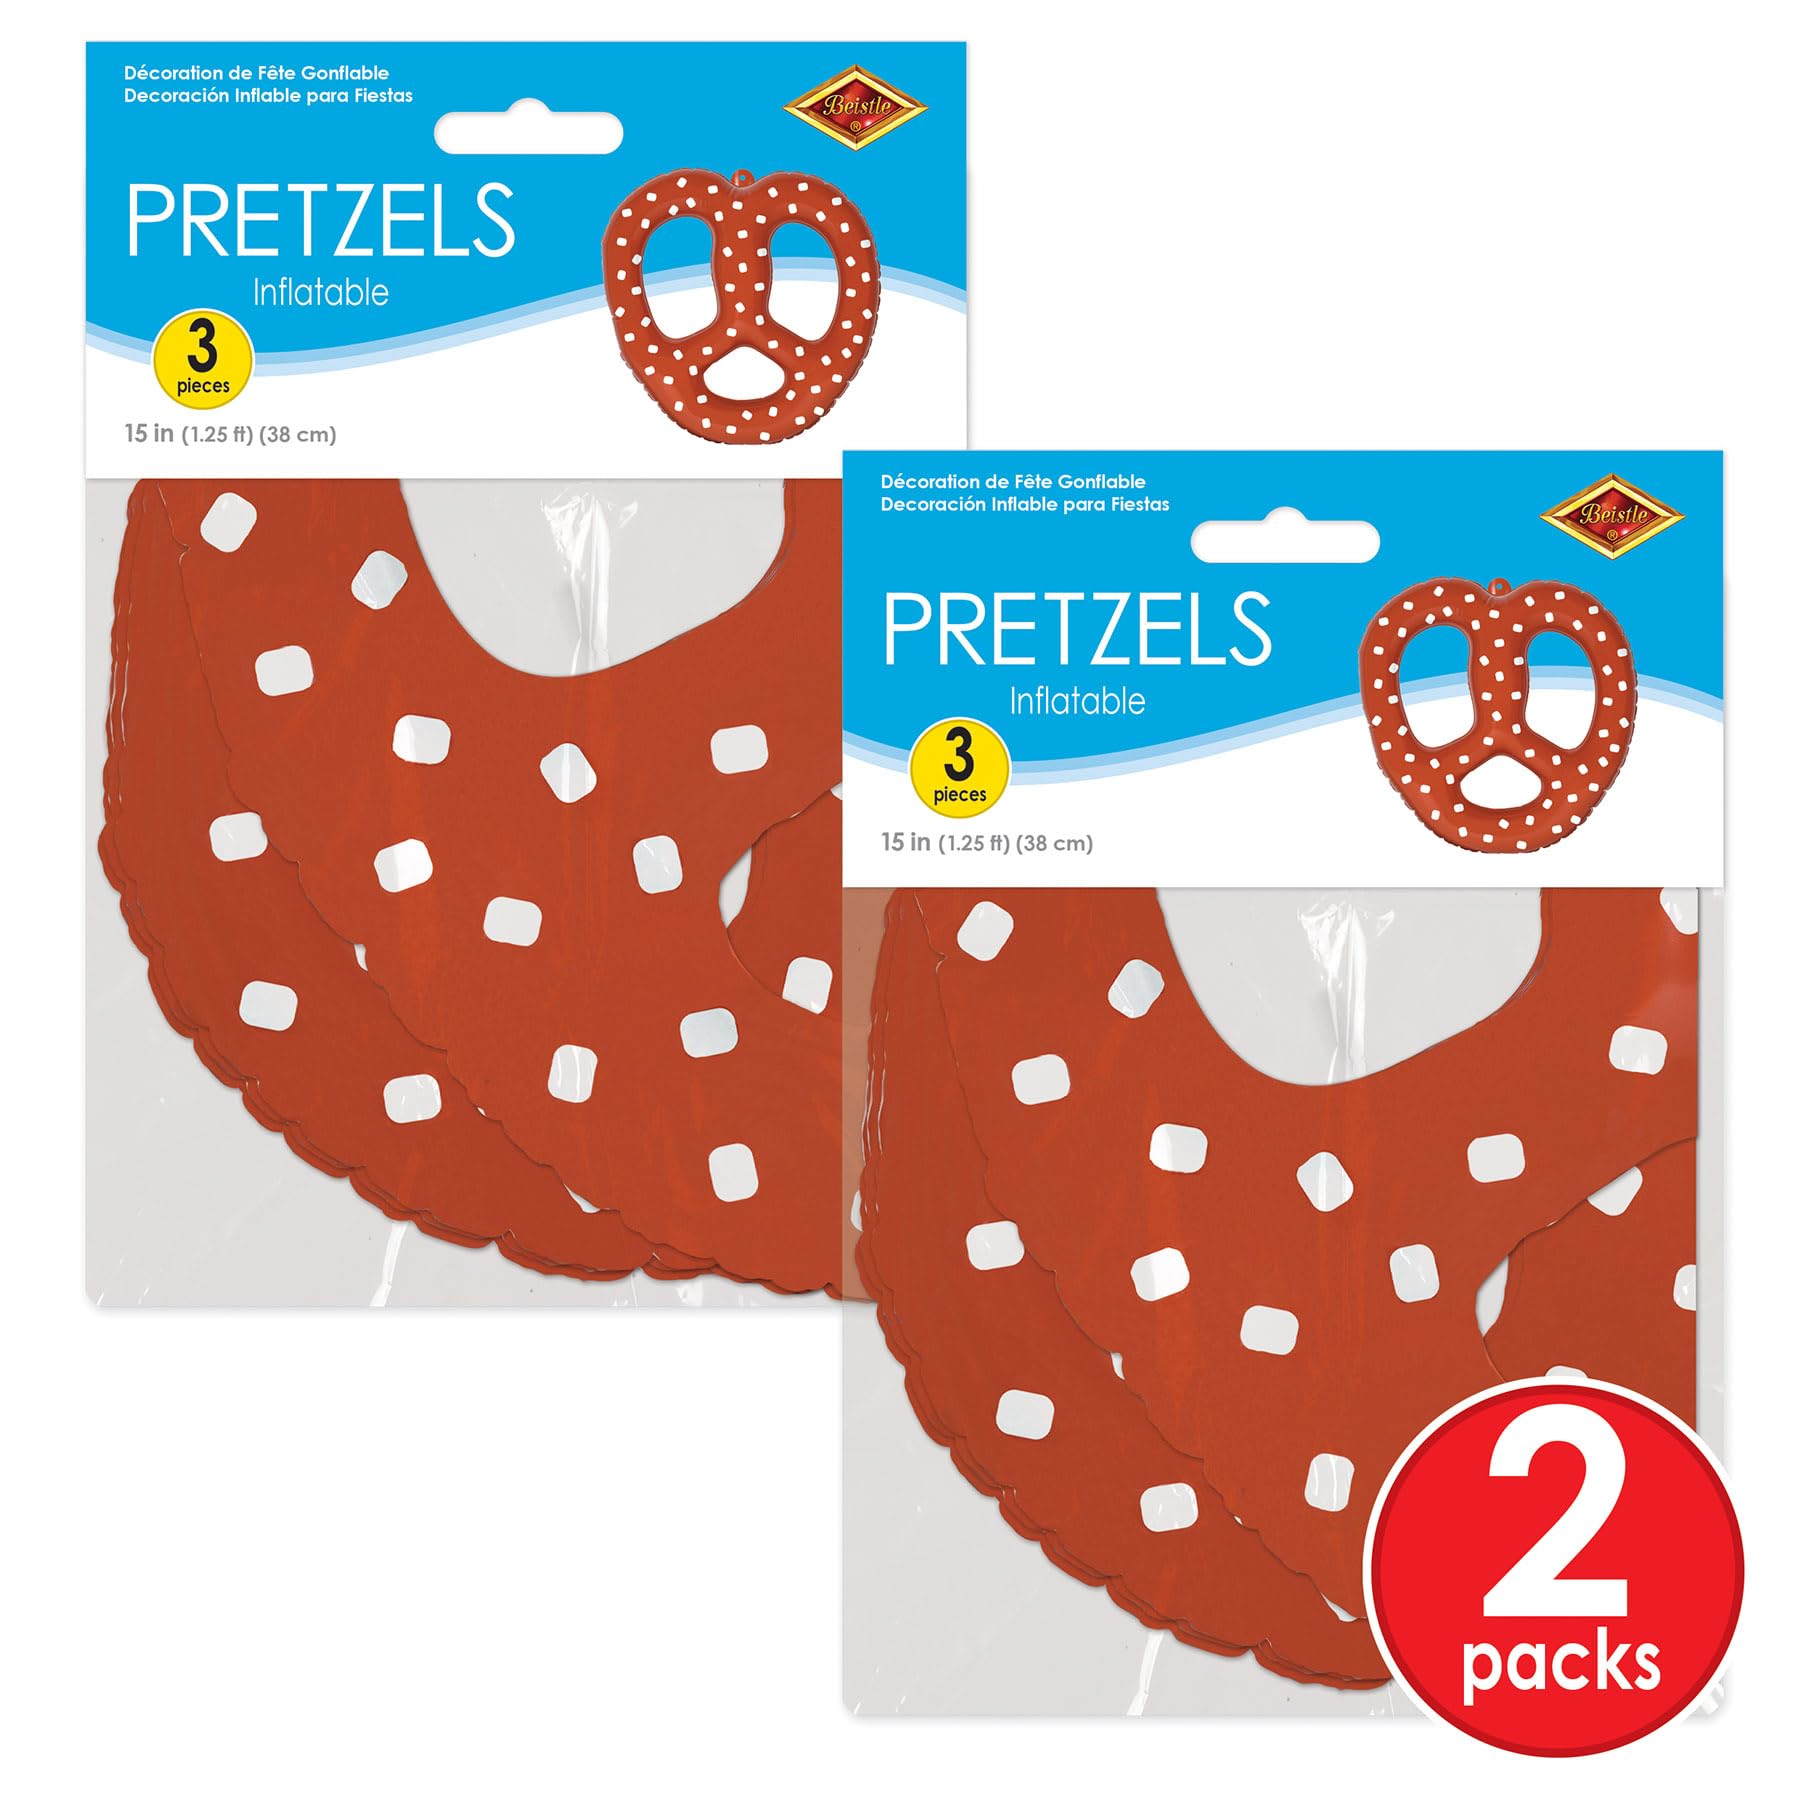 Beistle 15" 6 Piece Inflatable Bavarian Pretzels for German Theme Oktoberfest Party Decorations, 15.5" x 14.5", Brown/White